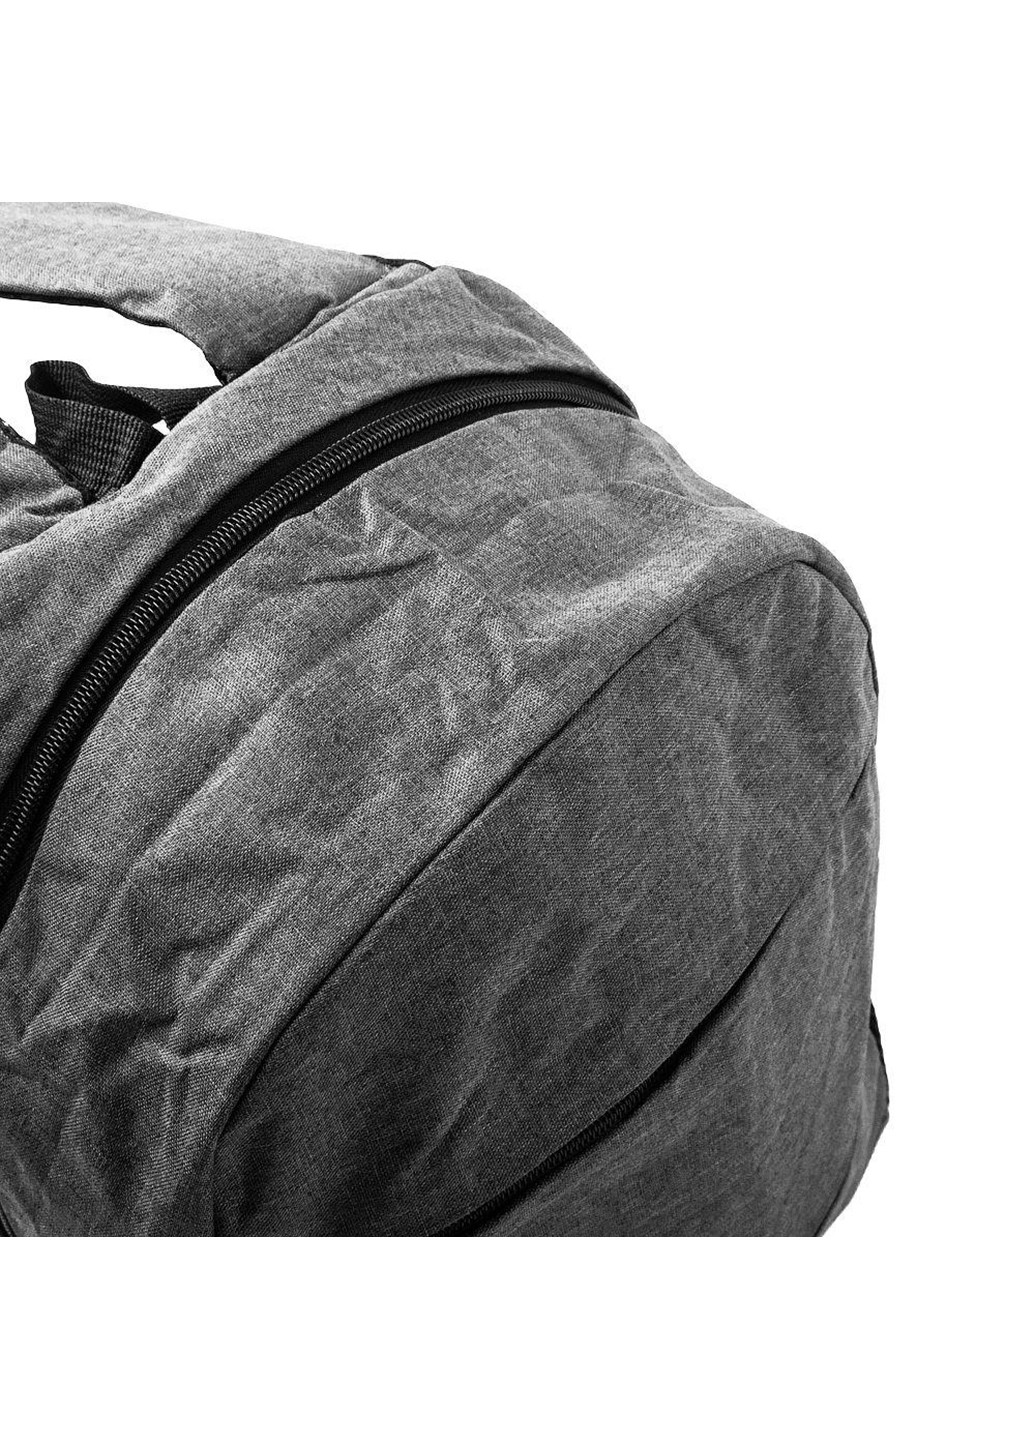 Мужской смарт-рюкзак 28х43х9 см Valiria Fashion (252131266)